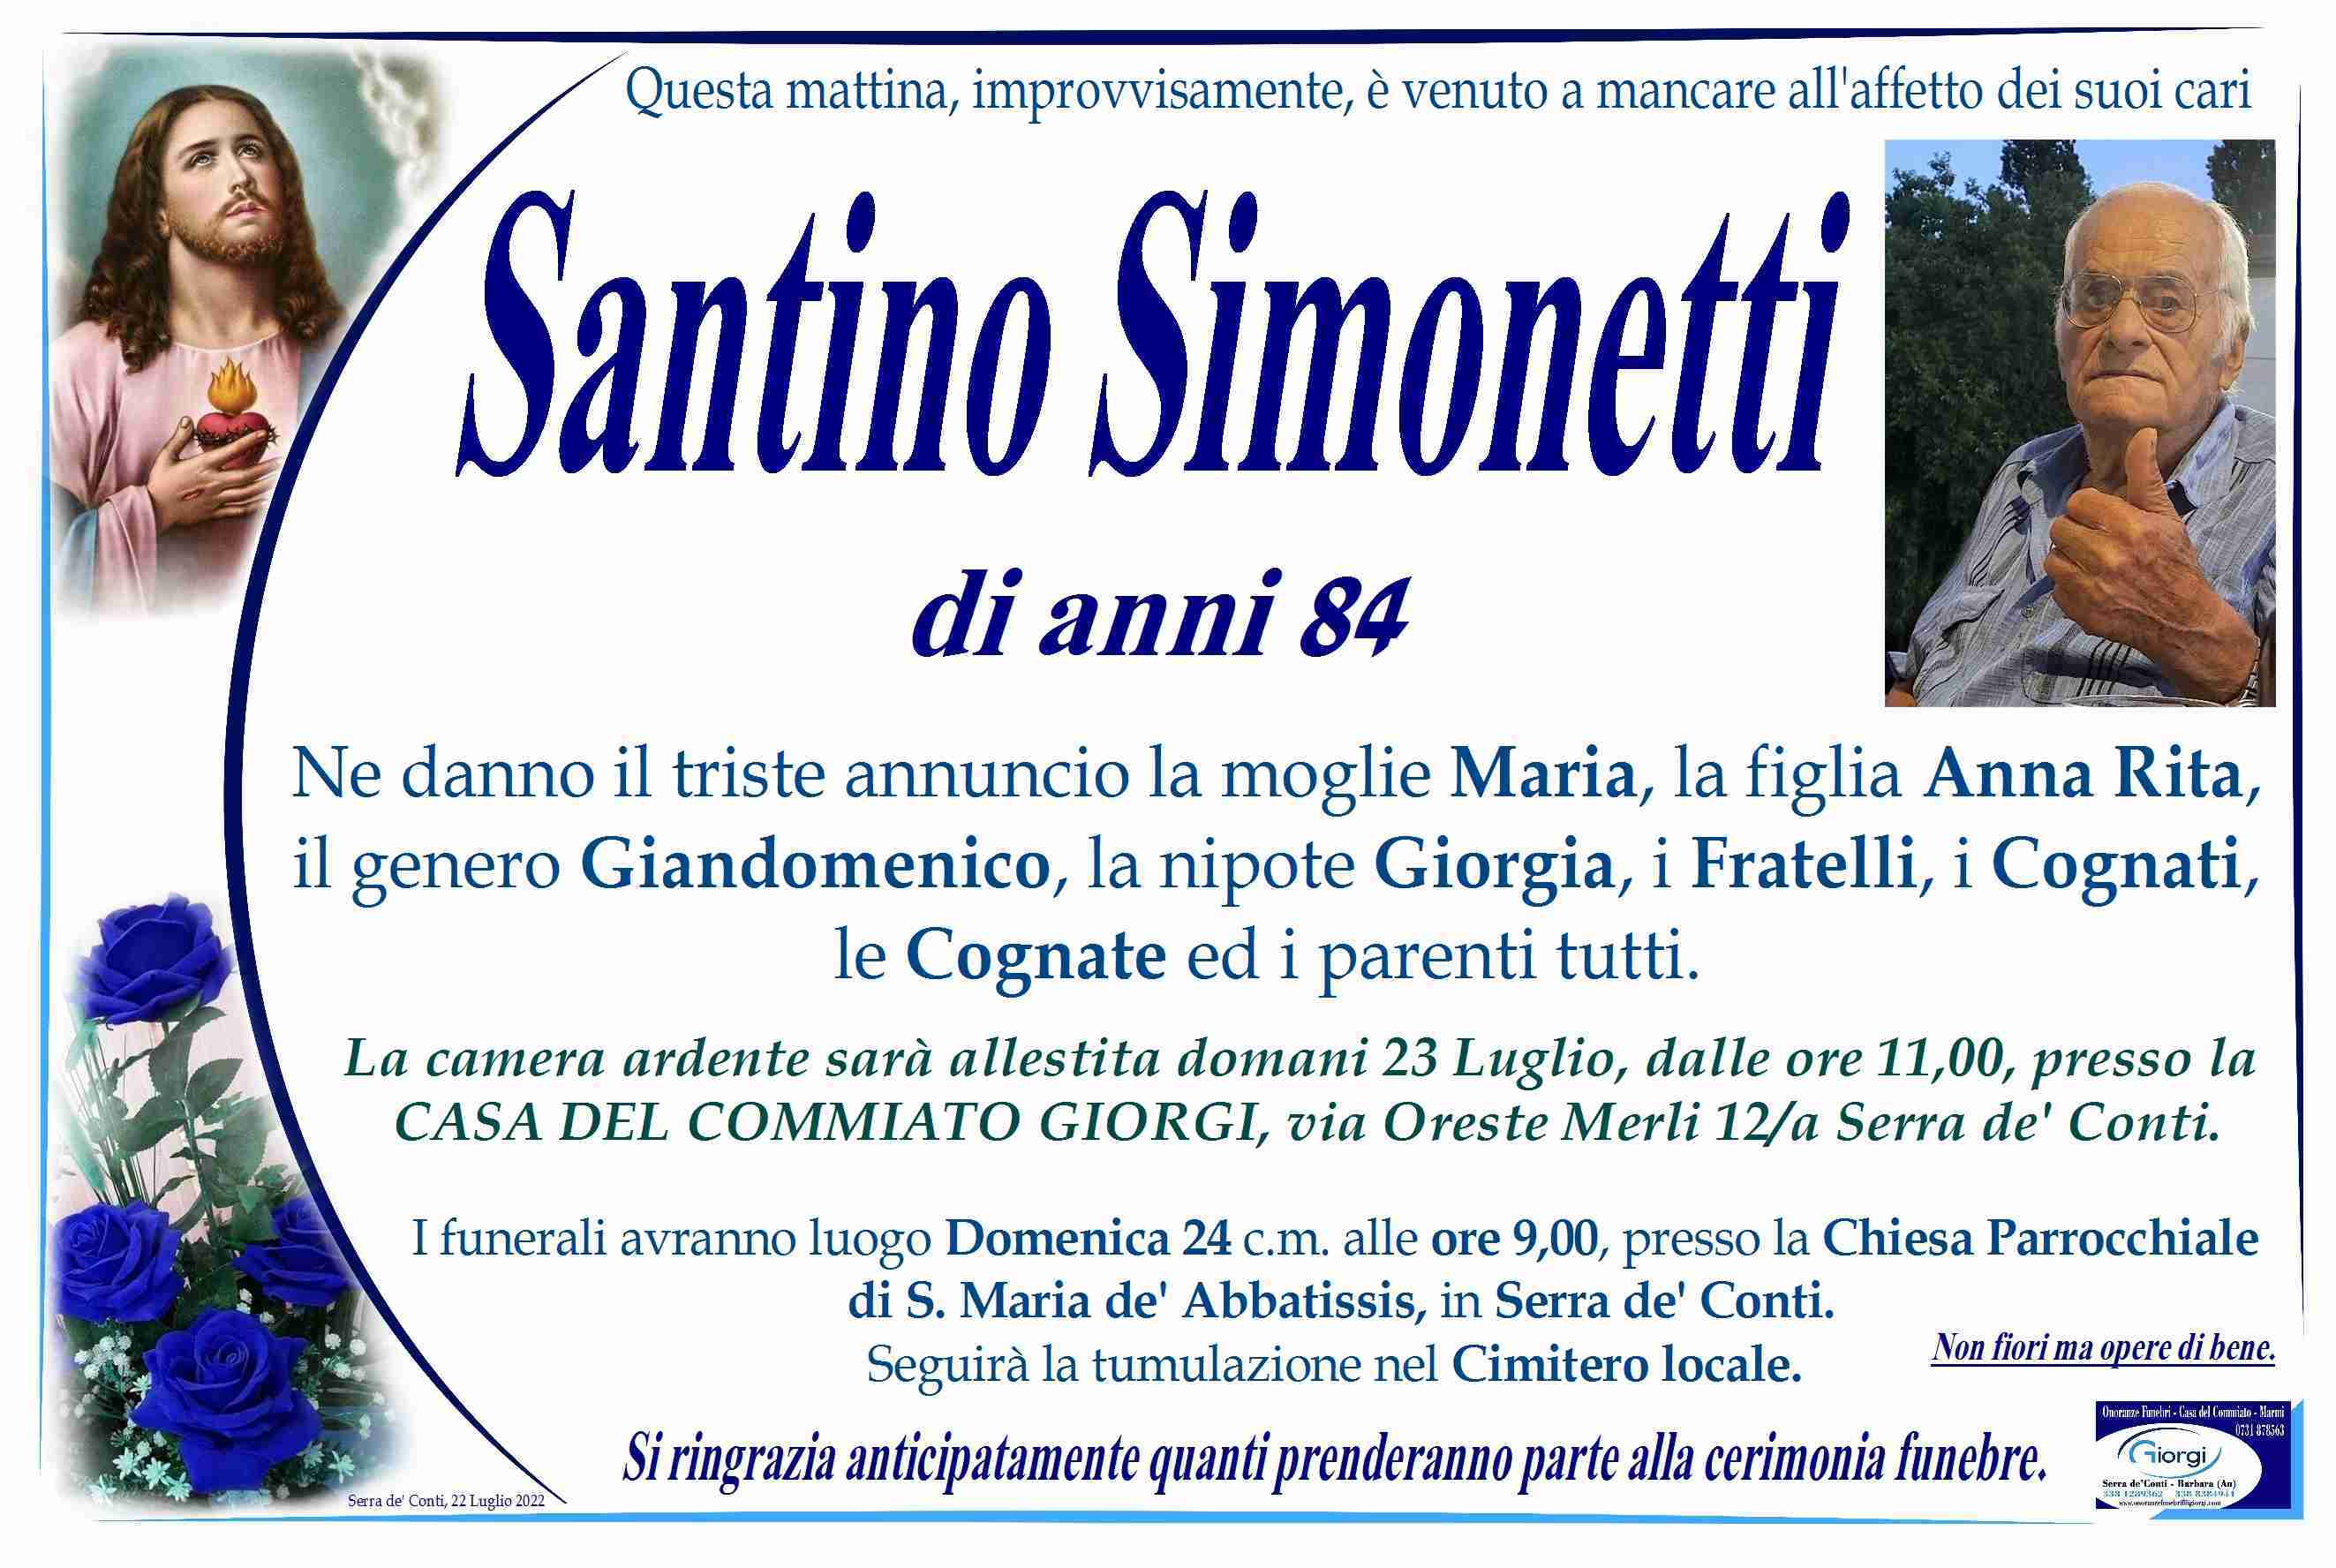 Santino Simonetti